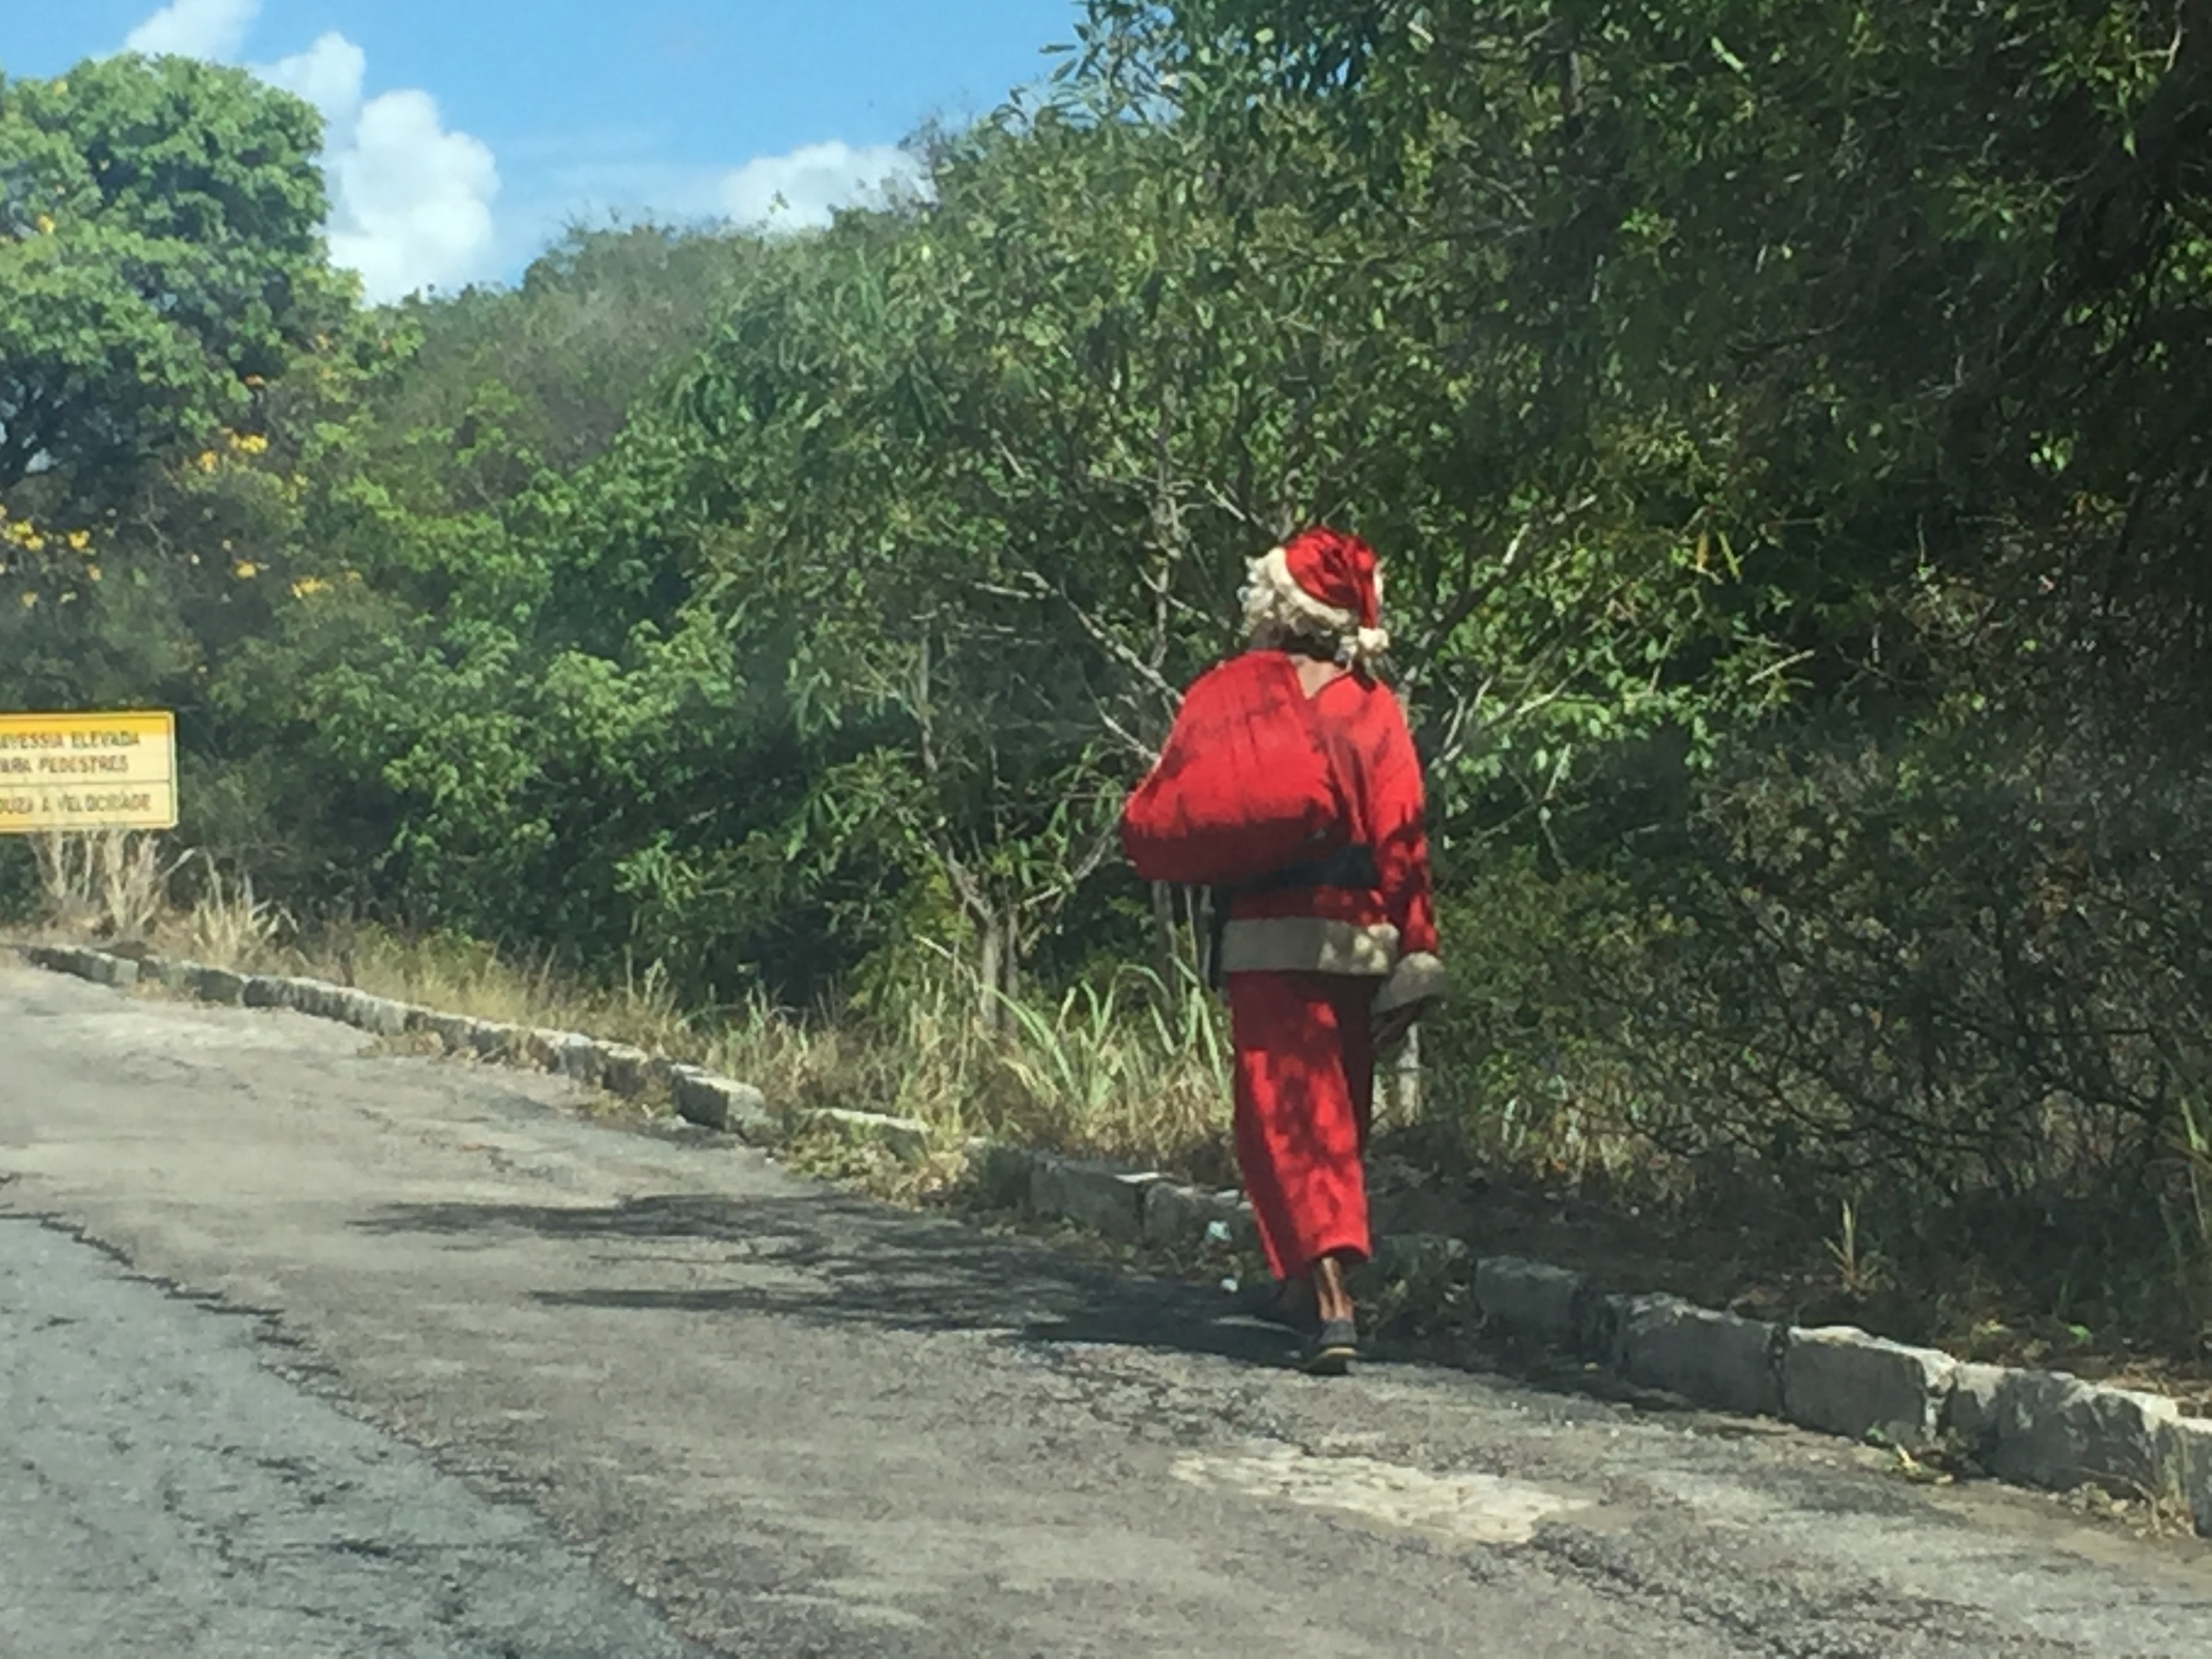 E este Papai Noel andando no meio de Natal?